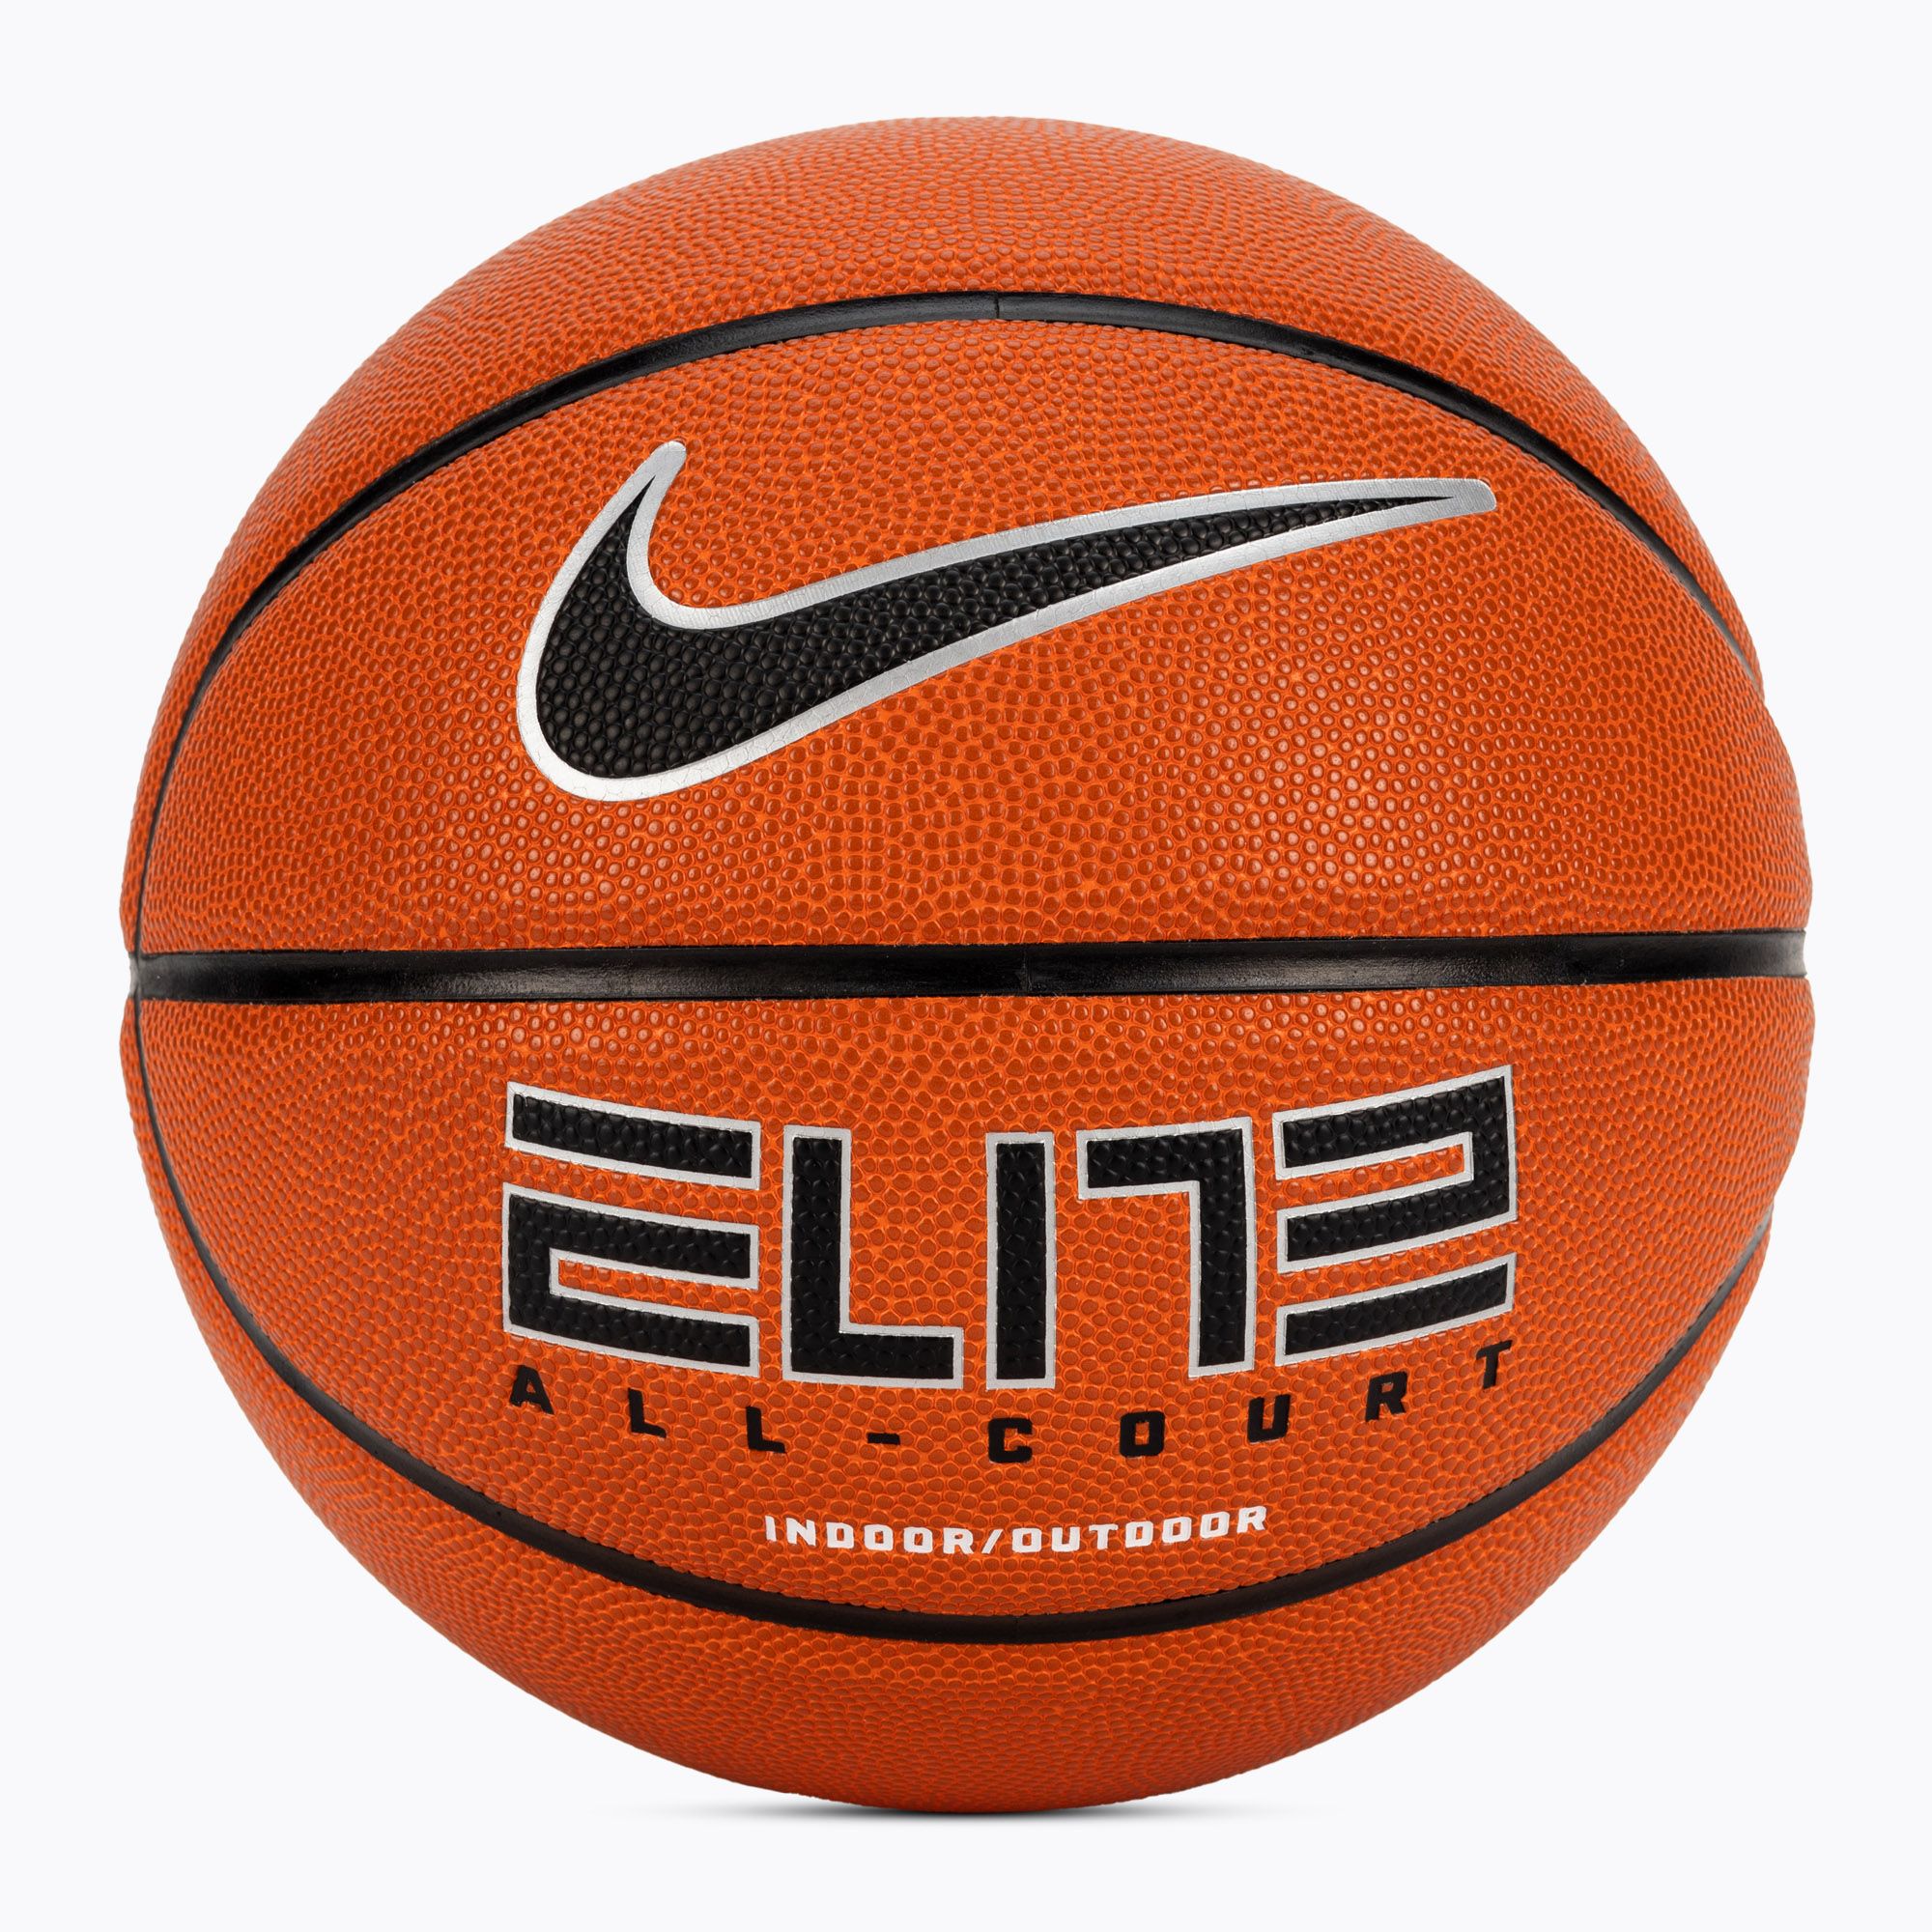 Piłka do koszykówki Nike Elite All Court 8P 2.0 Deflated amber/black/metallic silver rozmiar 6